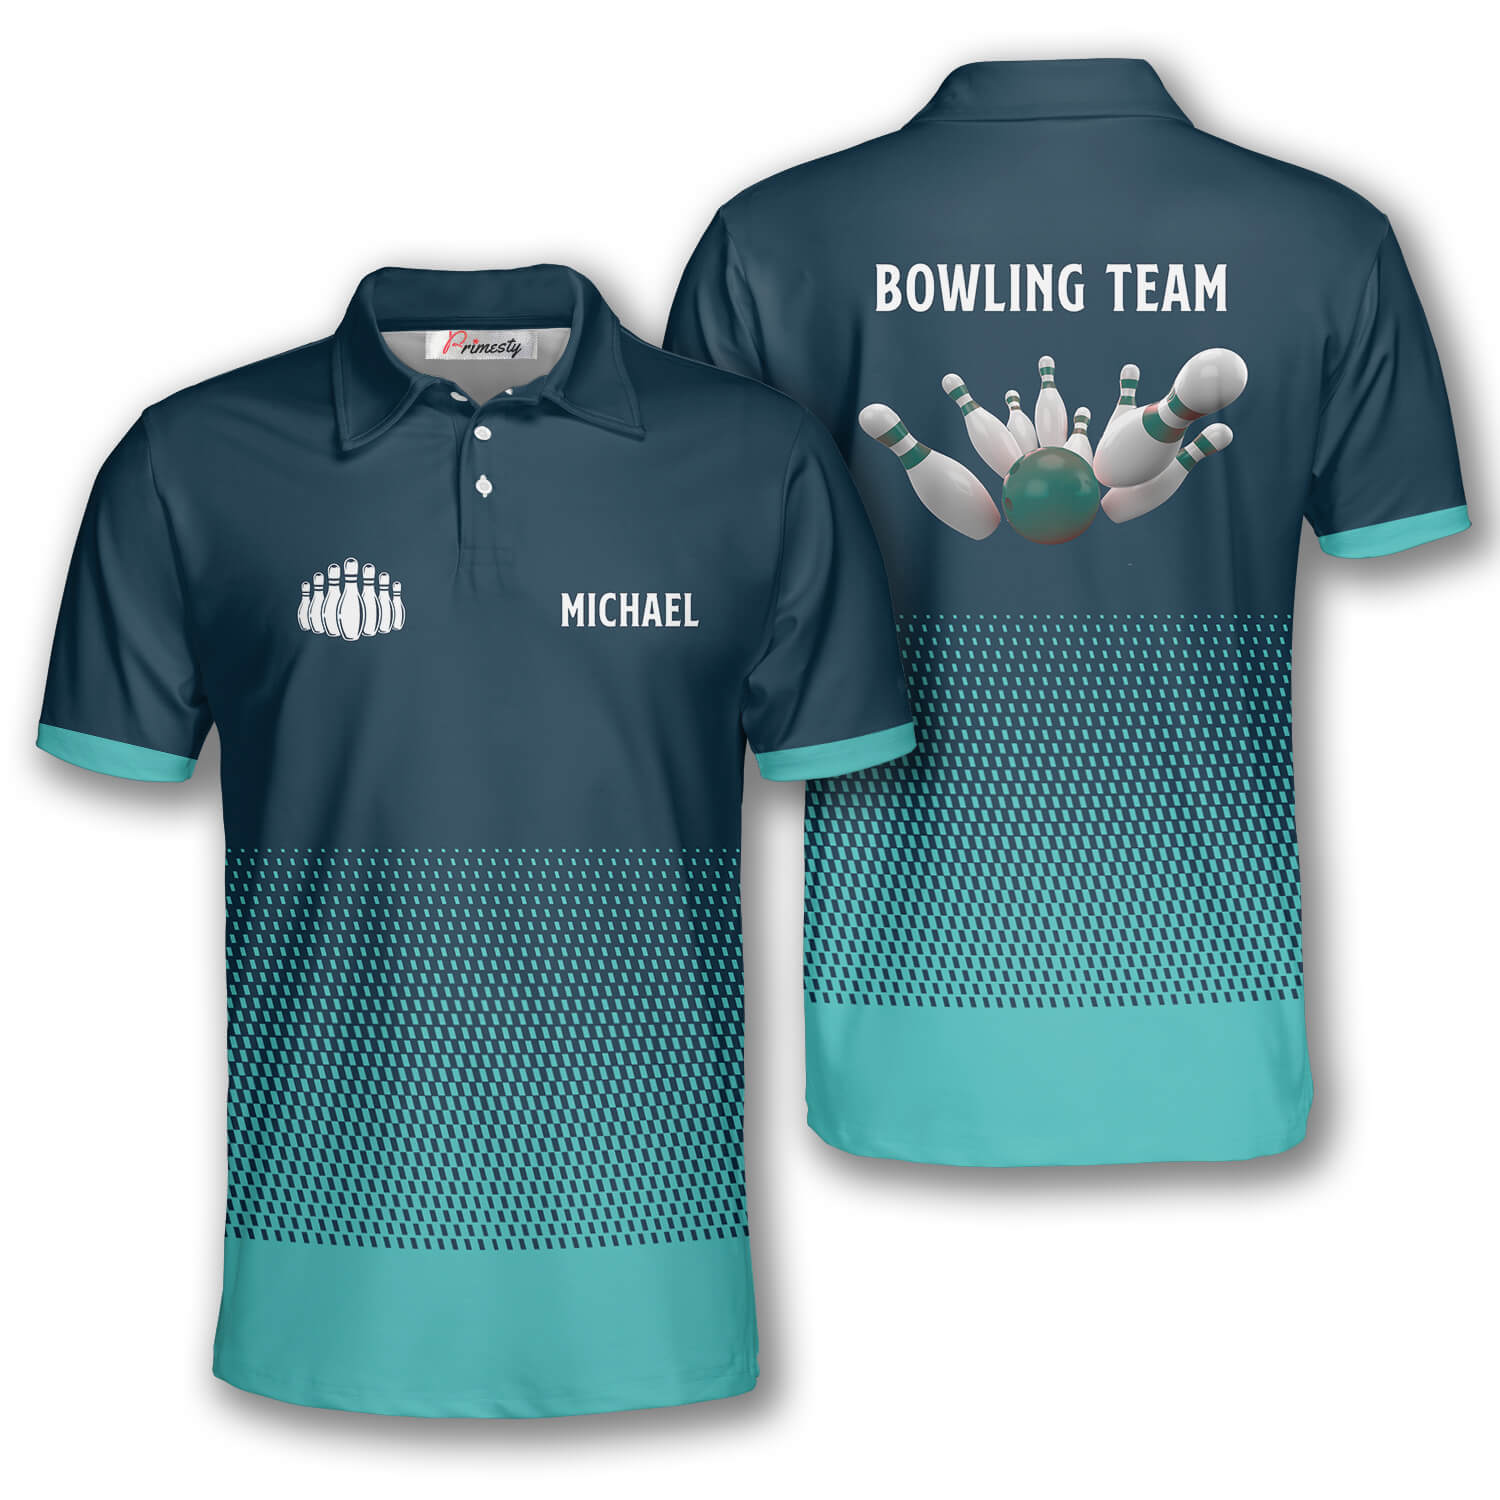 Winning Team Custom Bowling Shirts for Men - Primesty